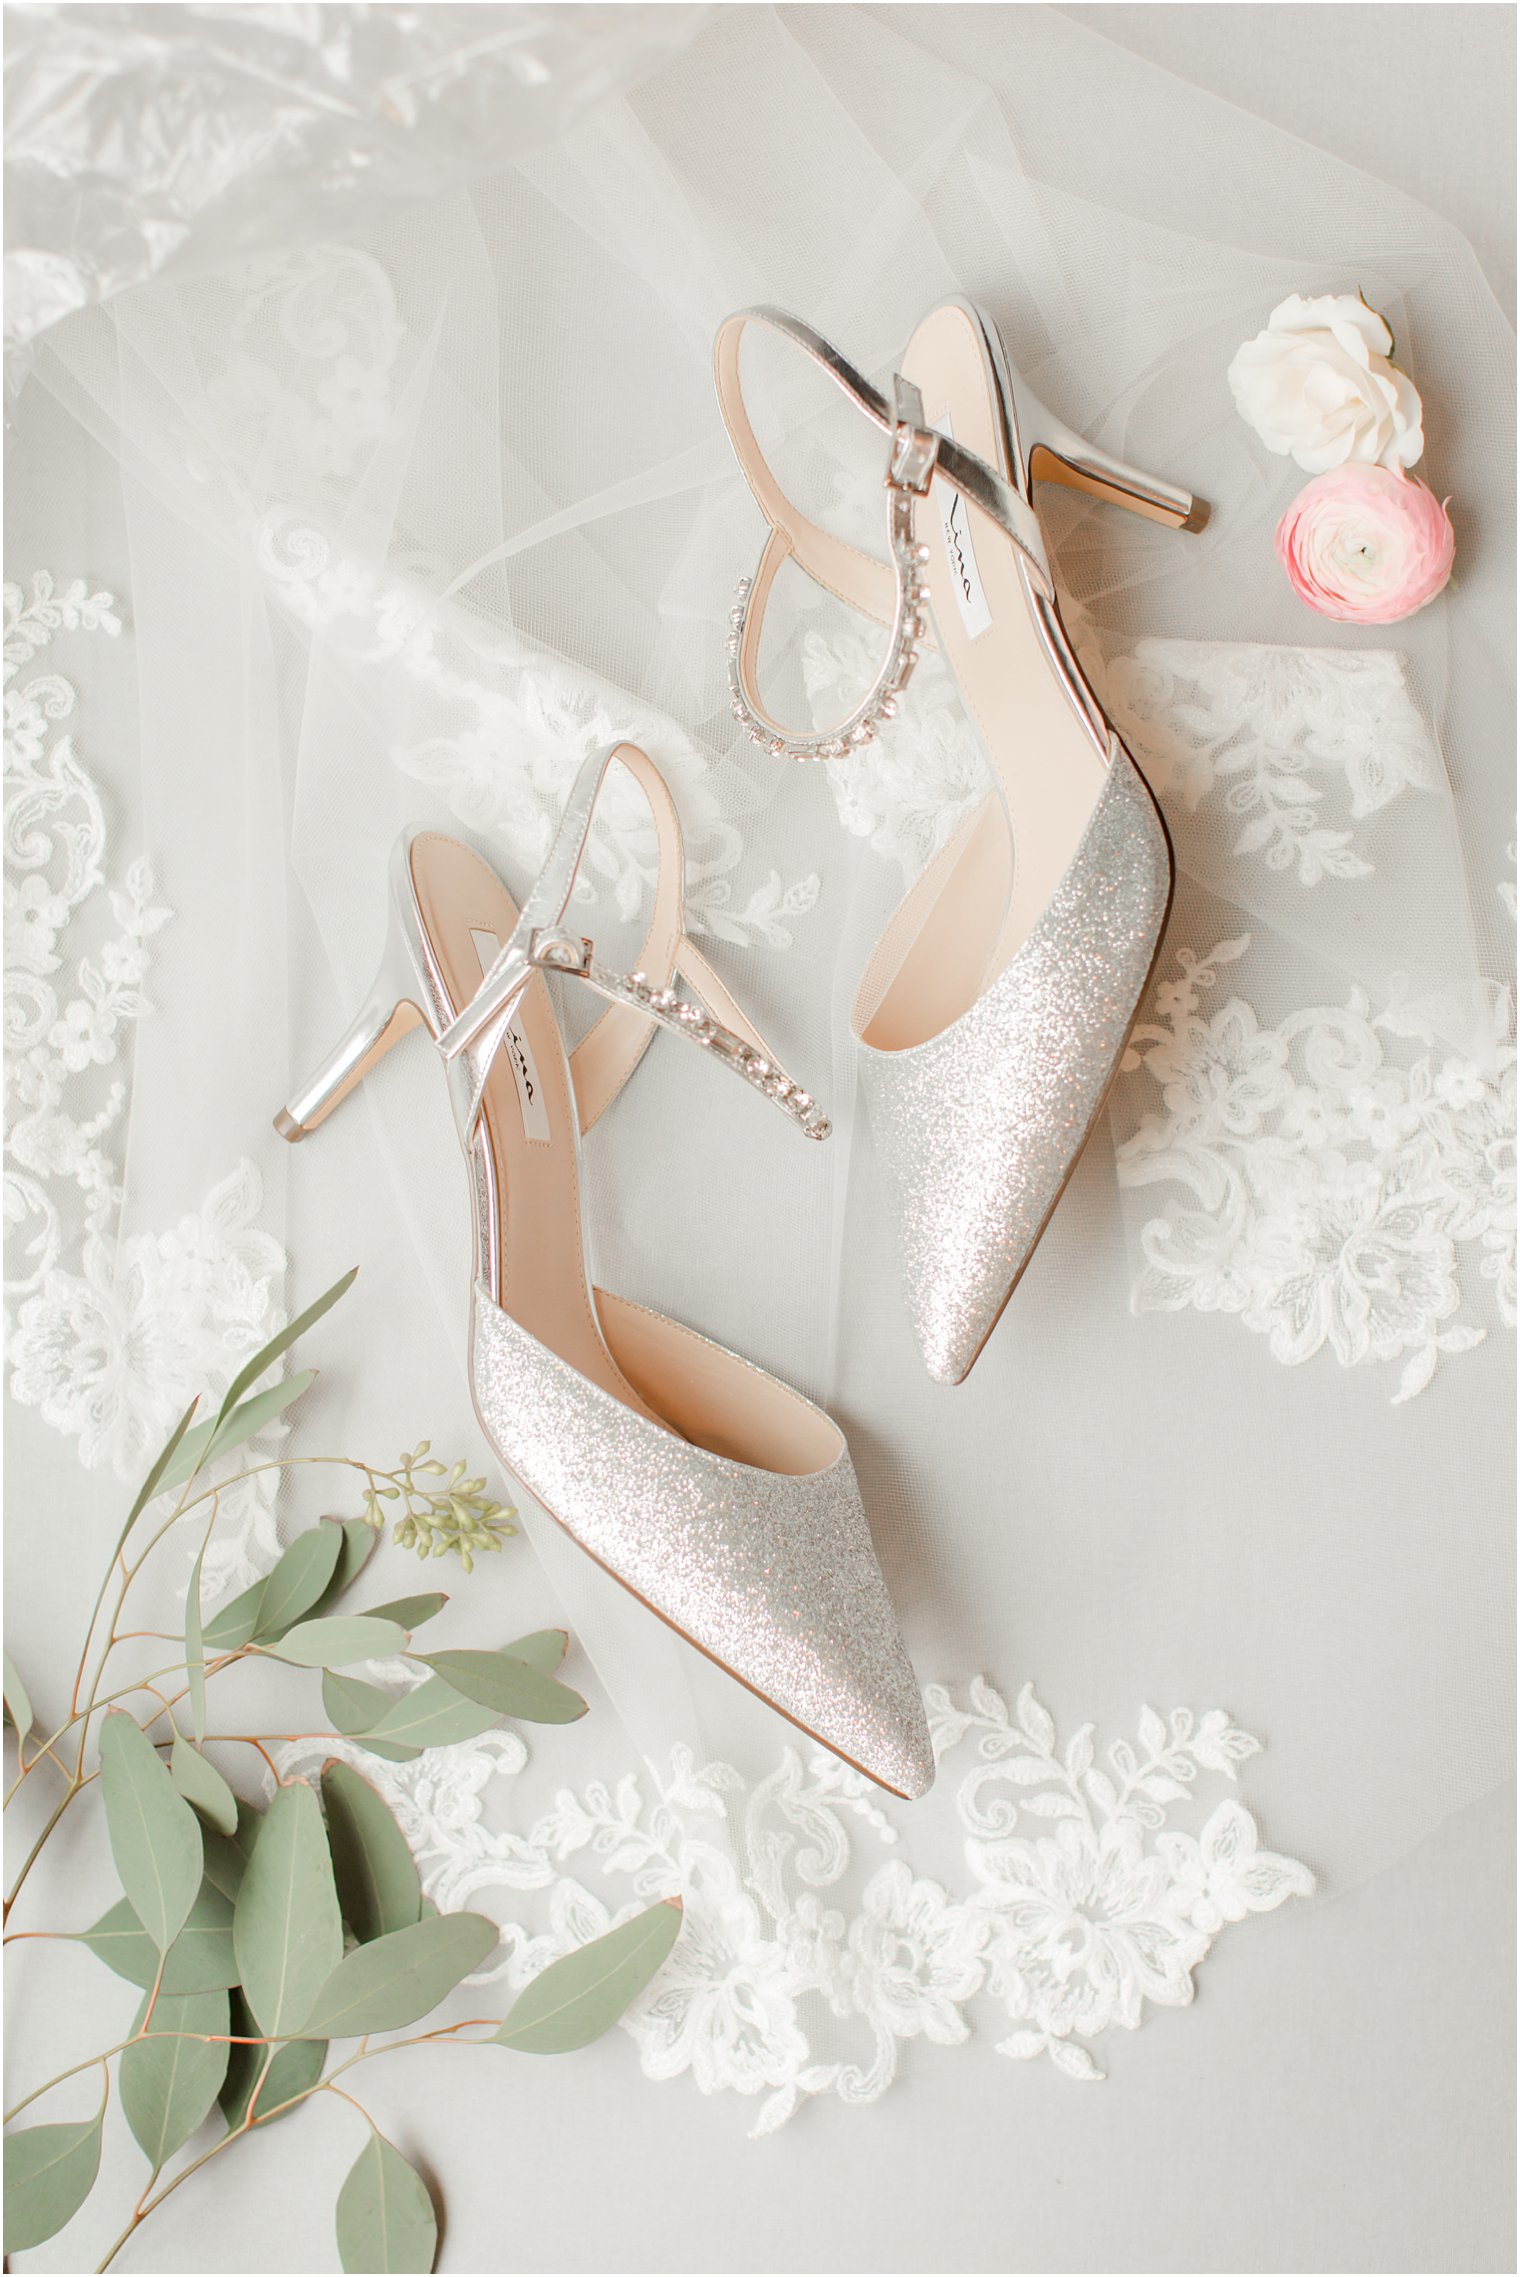 Nina Bridal Shoes for a classic wedding